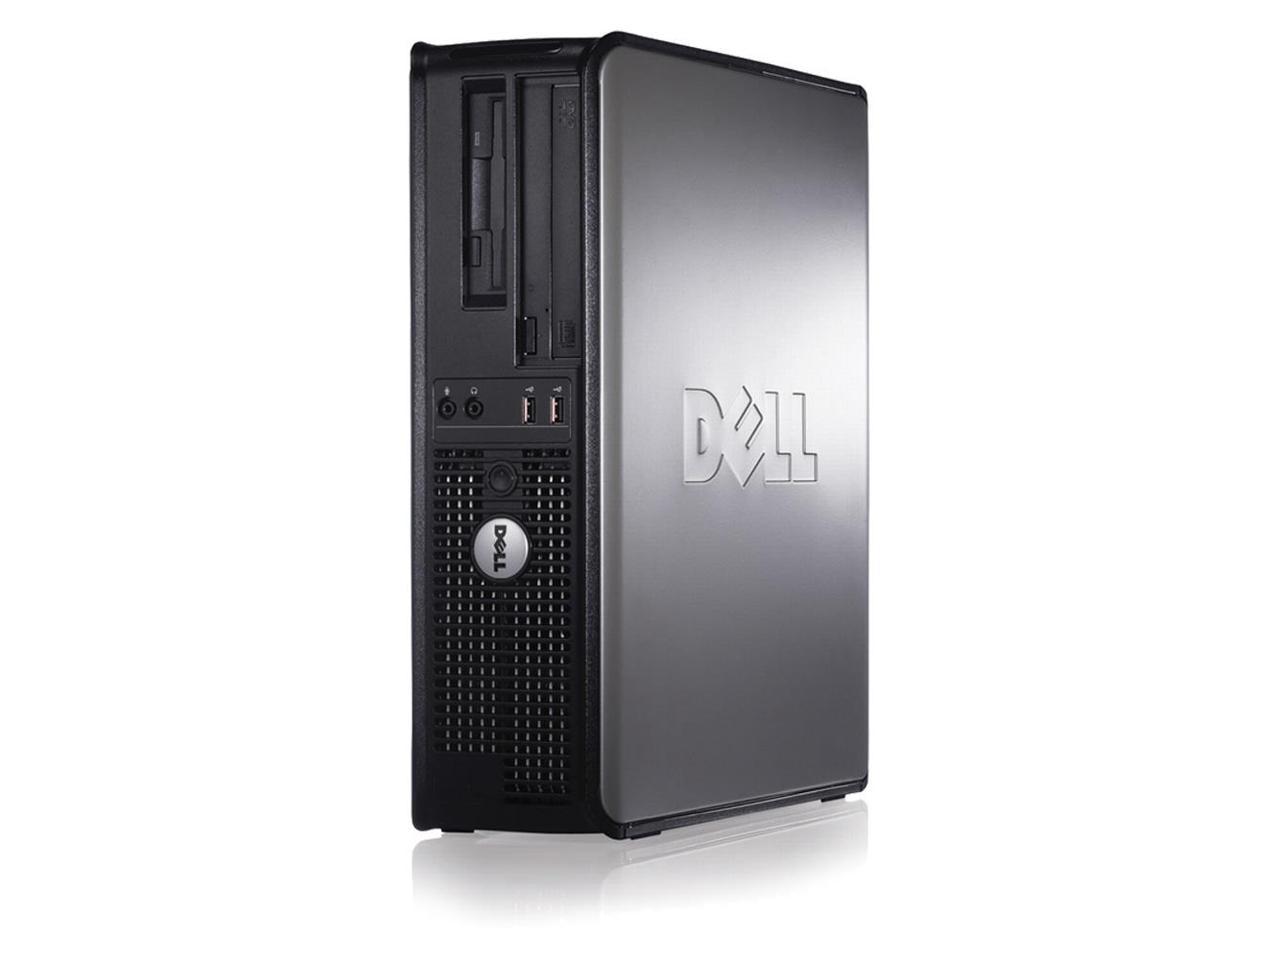 Dell OptiPlex 760 DT/Core 2 Duo E8400 @ 3.00 GHz/3GB DDR2/250GB HDD/DVD-RW/WINDOWS 7 PRO 32 BIT